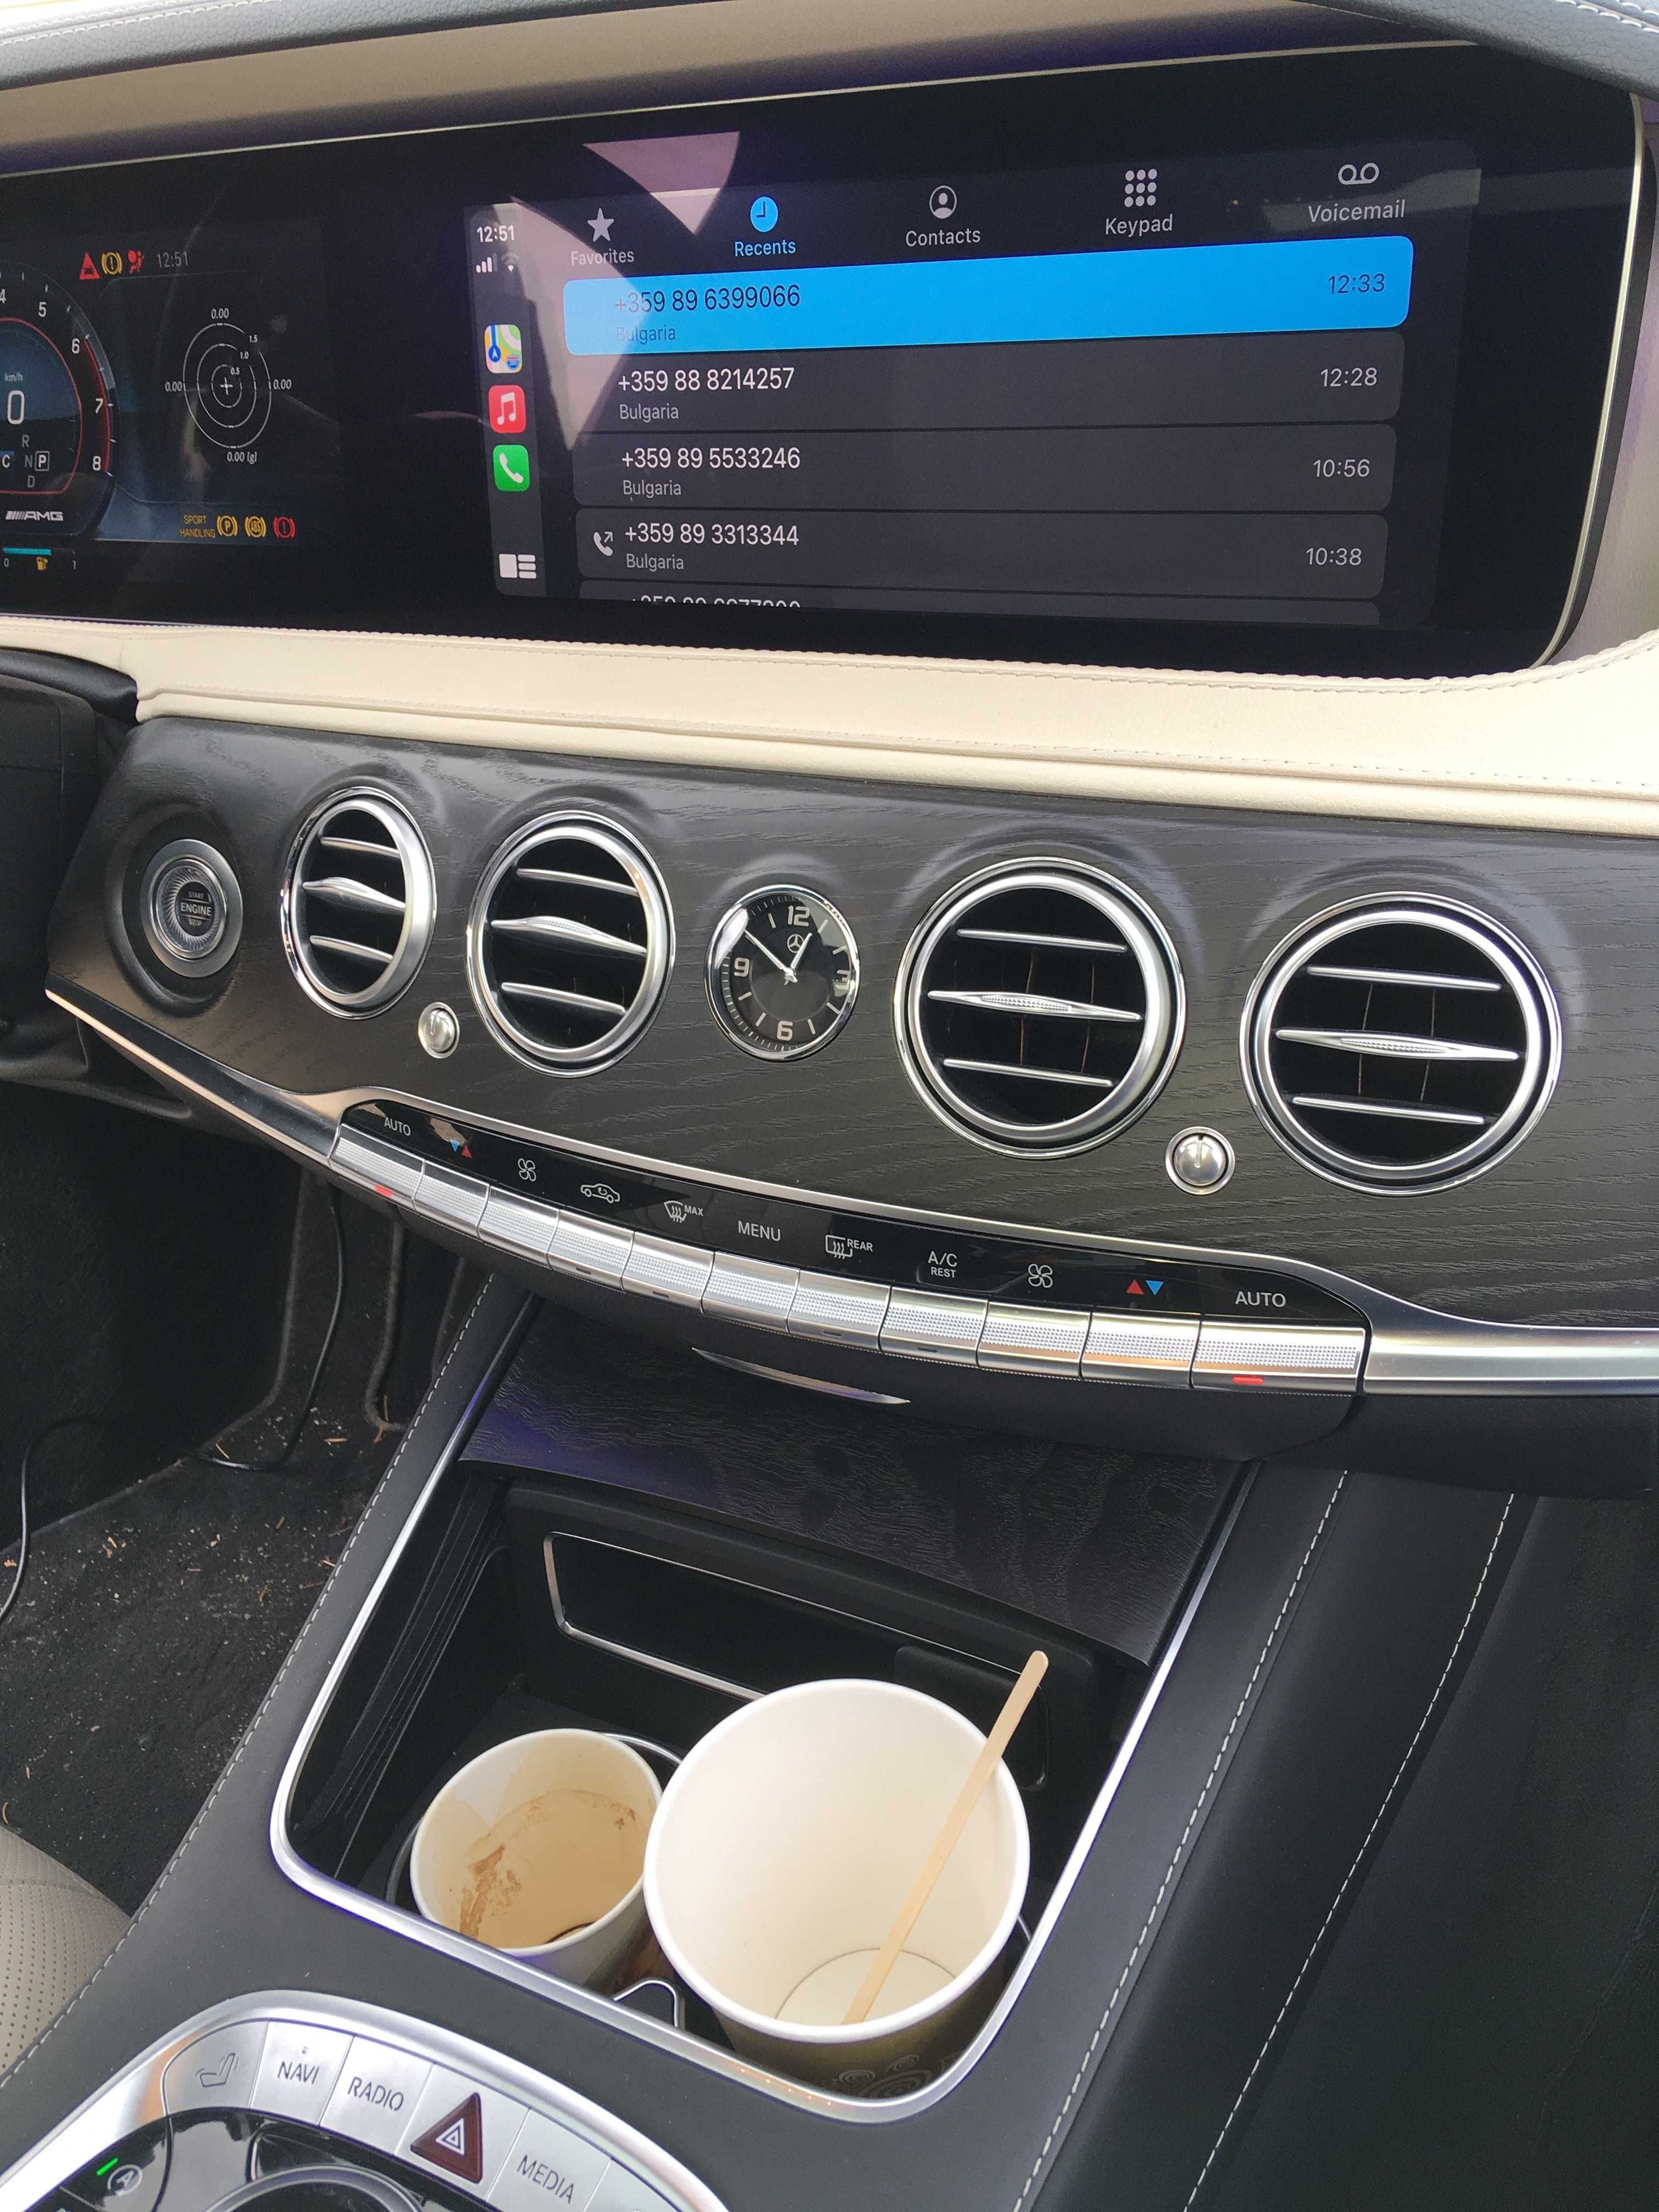 Mercedes Apple CarPlay Android Auto Programming HU Flashing Активиране